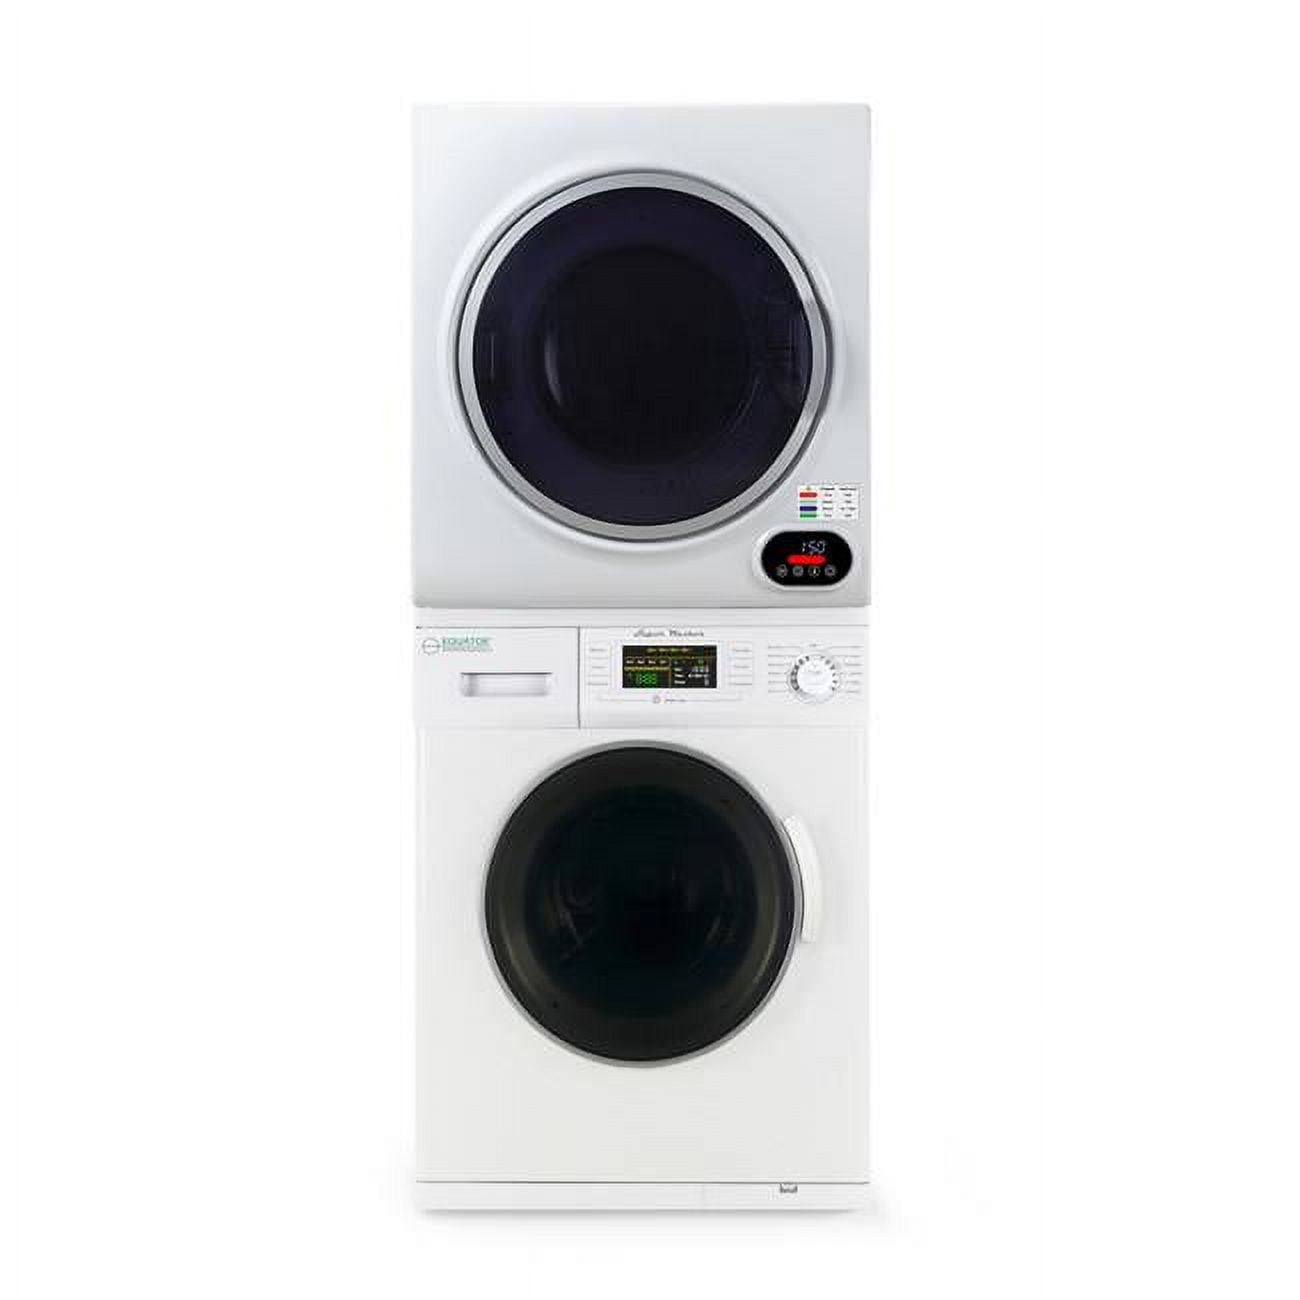 Portable Washing Machine, YOFE Portable Compact Clothes Washing Machine,  Semi Automatic Washing Machine, Mini Twin Tub Washing Machine for  Apartments, Washer(7.7lbs) /Spiner(6.6lbs), Gray, R4870 